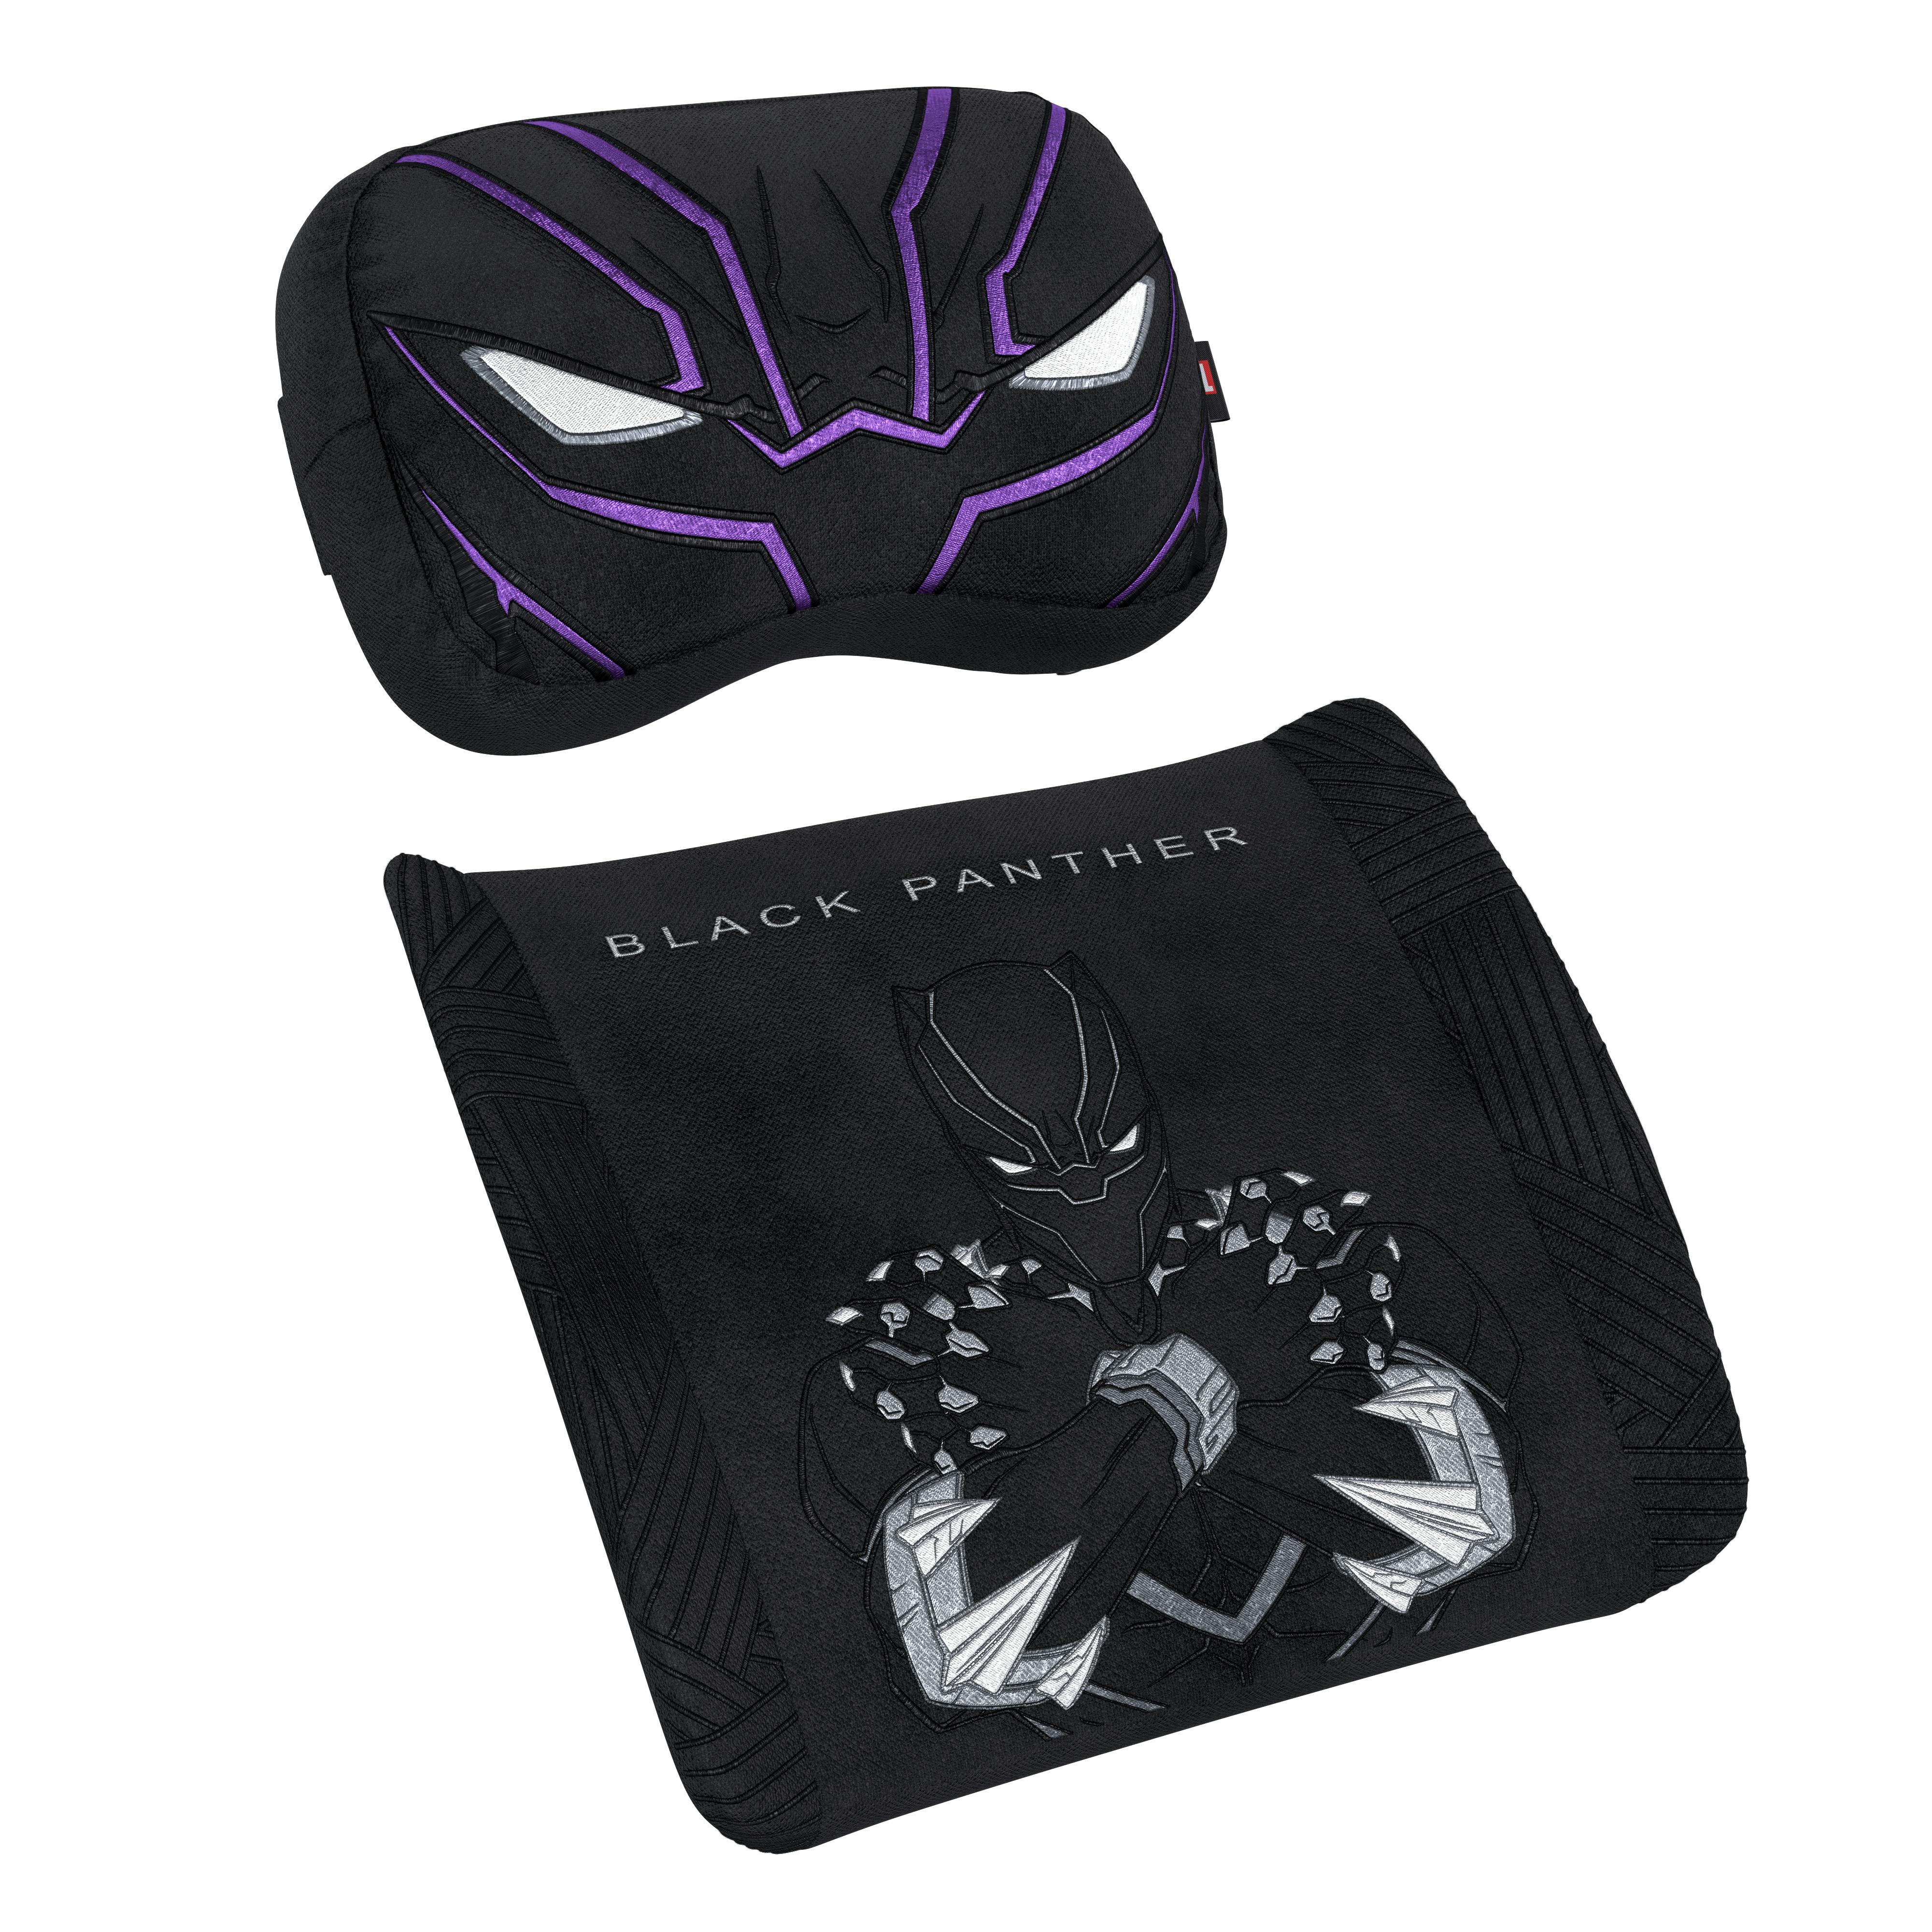  - Memory Foam Pillow Set - Black Panther Edition